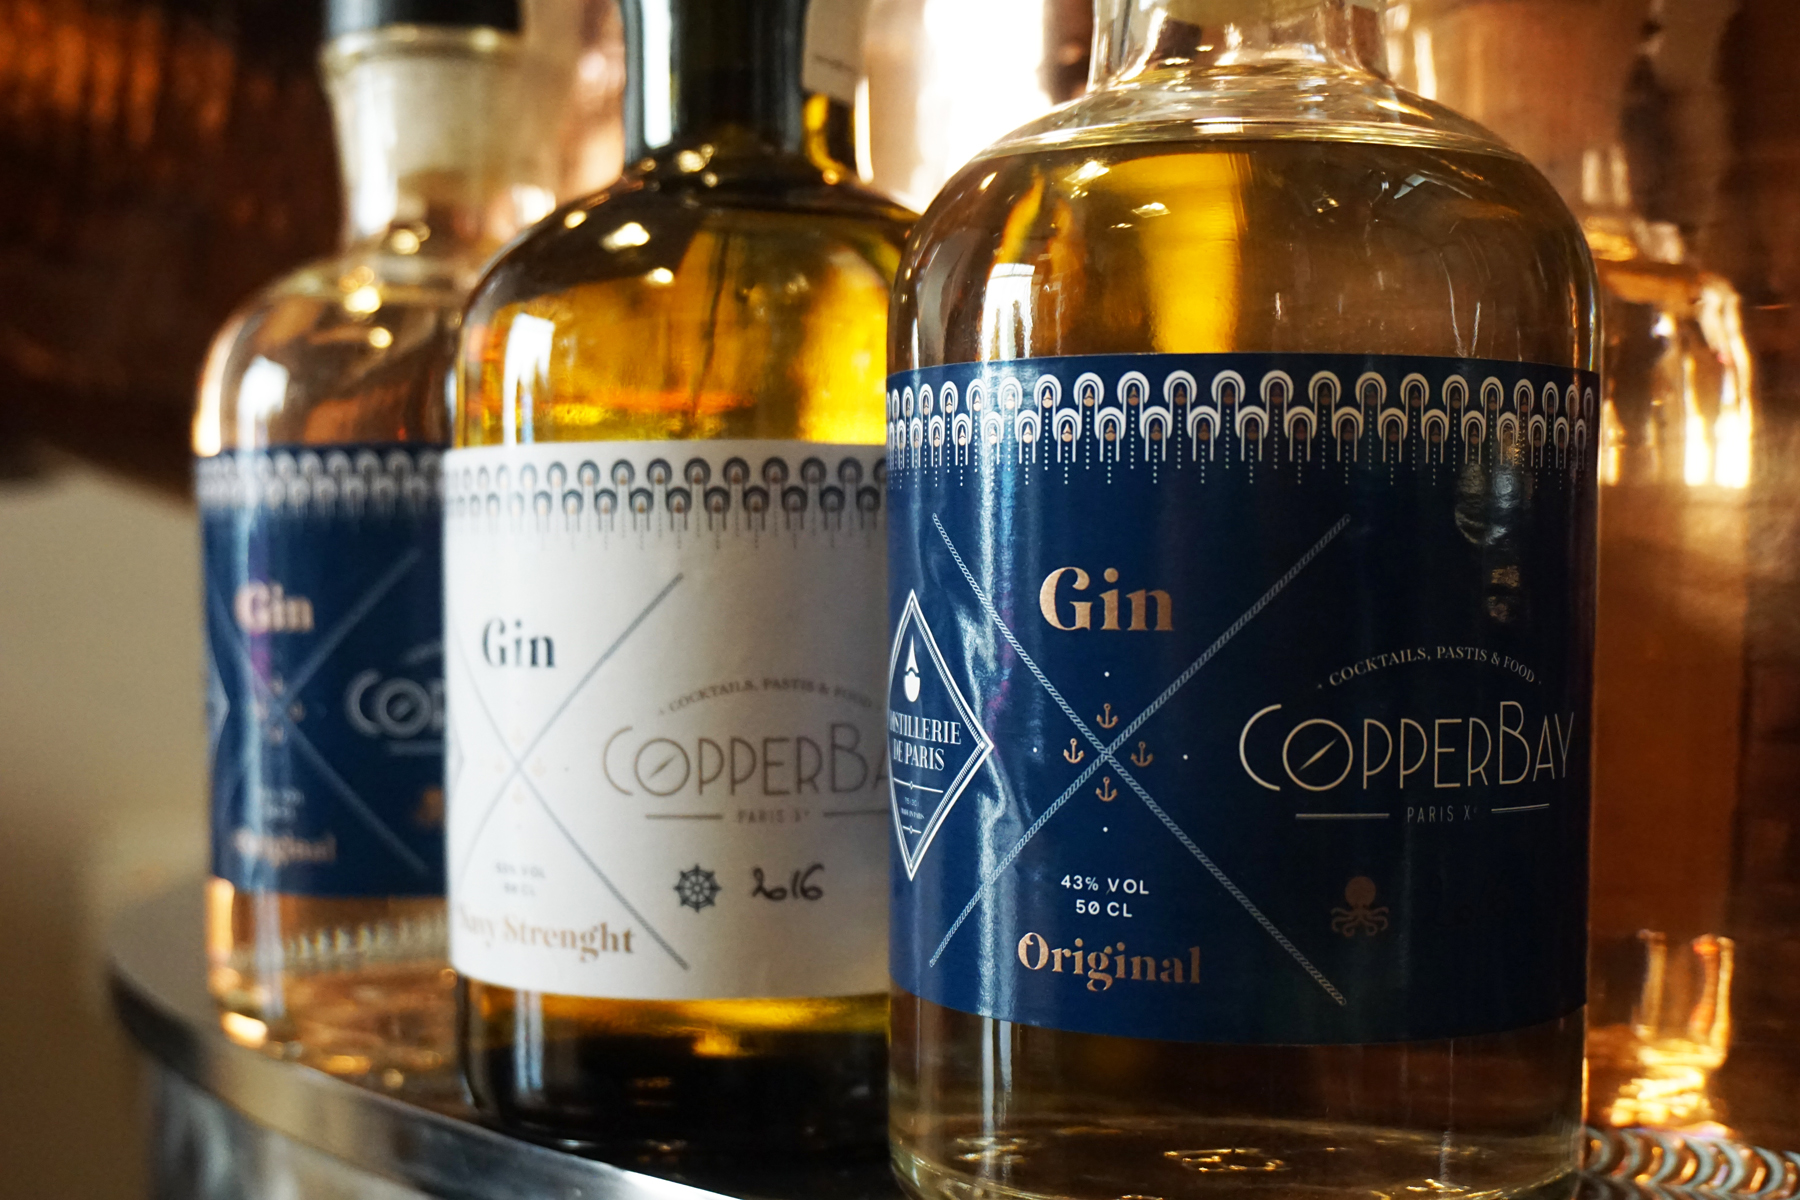 Les gins du CopperBay - Photo 5